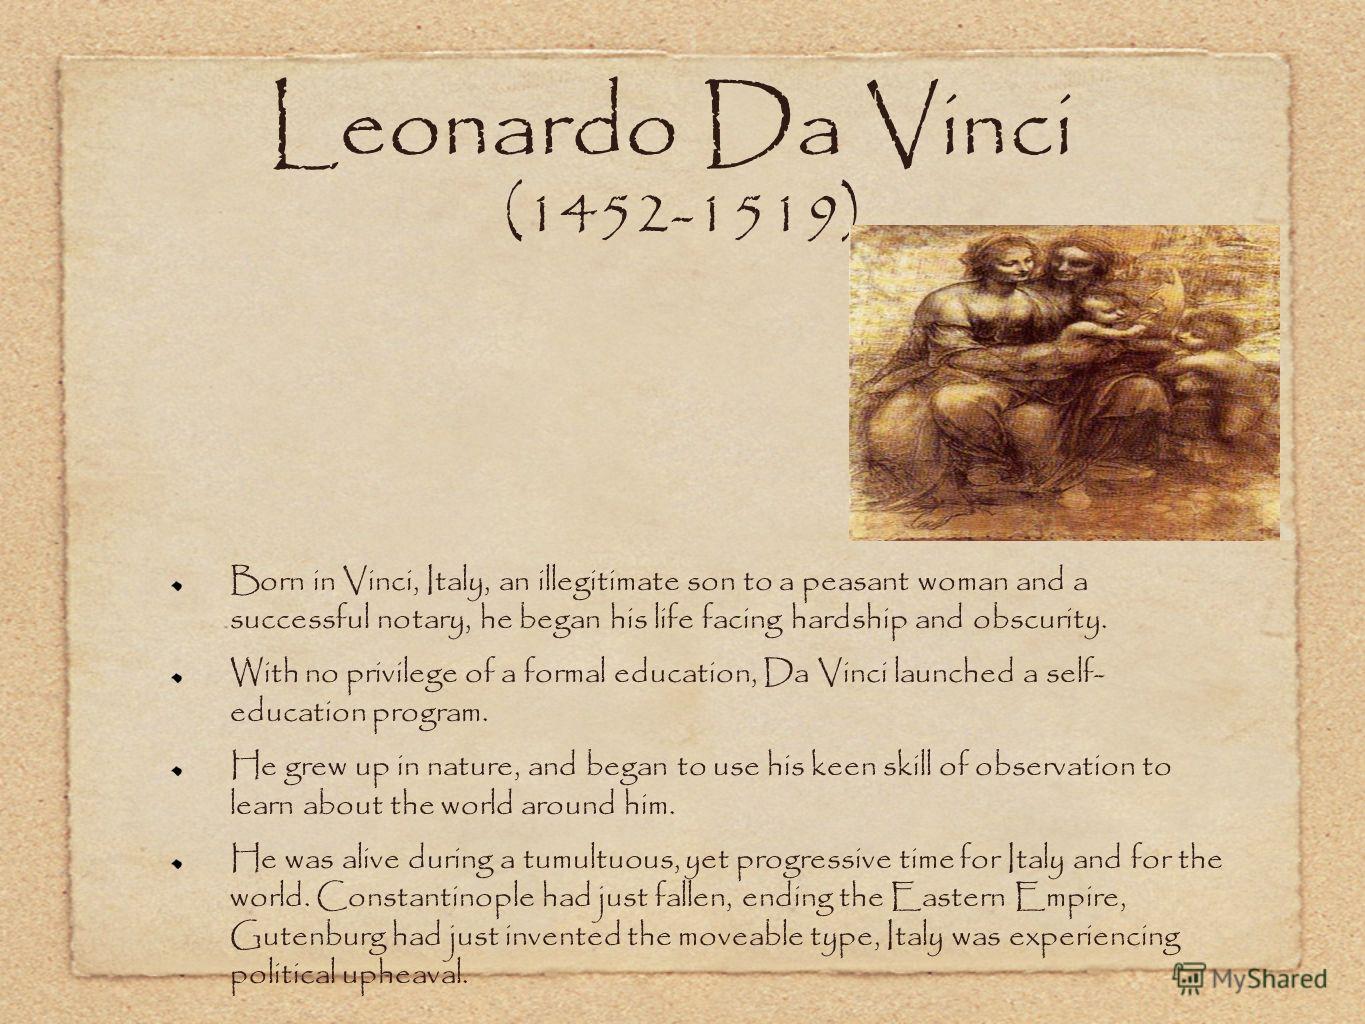 Leonardo da Vinci - Paintings, Drawings, Quotes, Facts